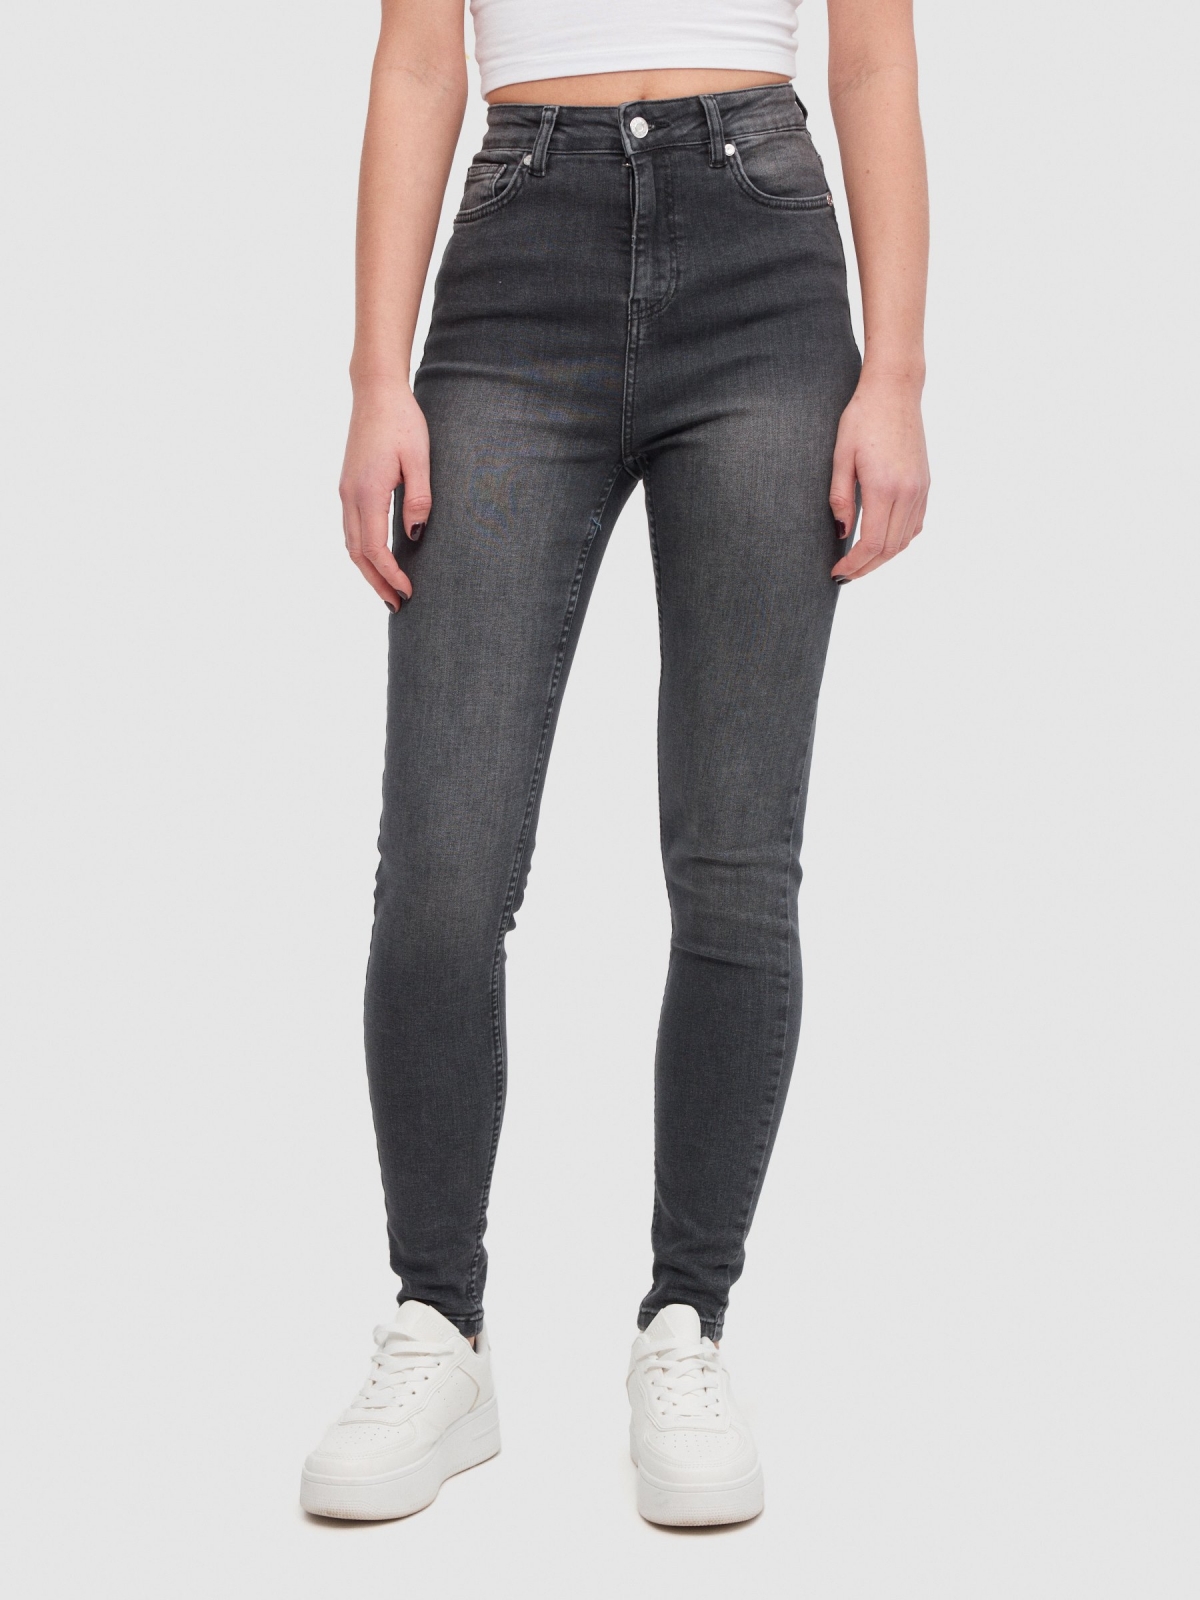 Jeans skinny de cintura alta desgaste preto vista meia frontal